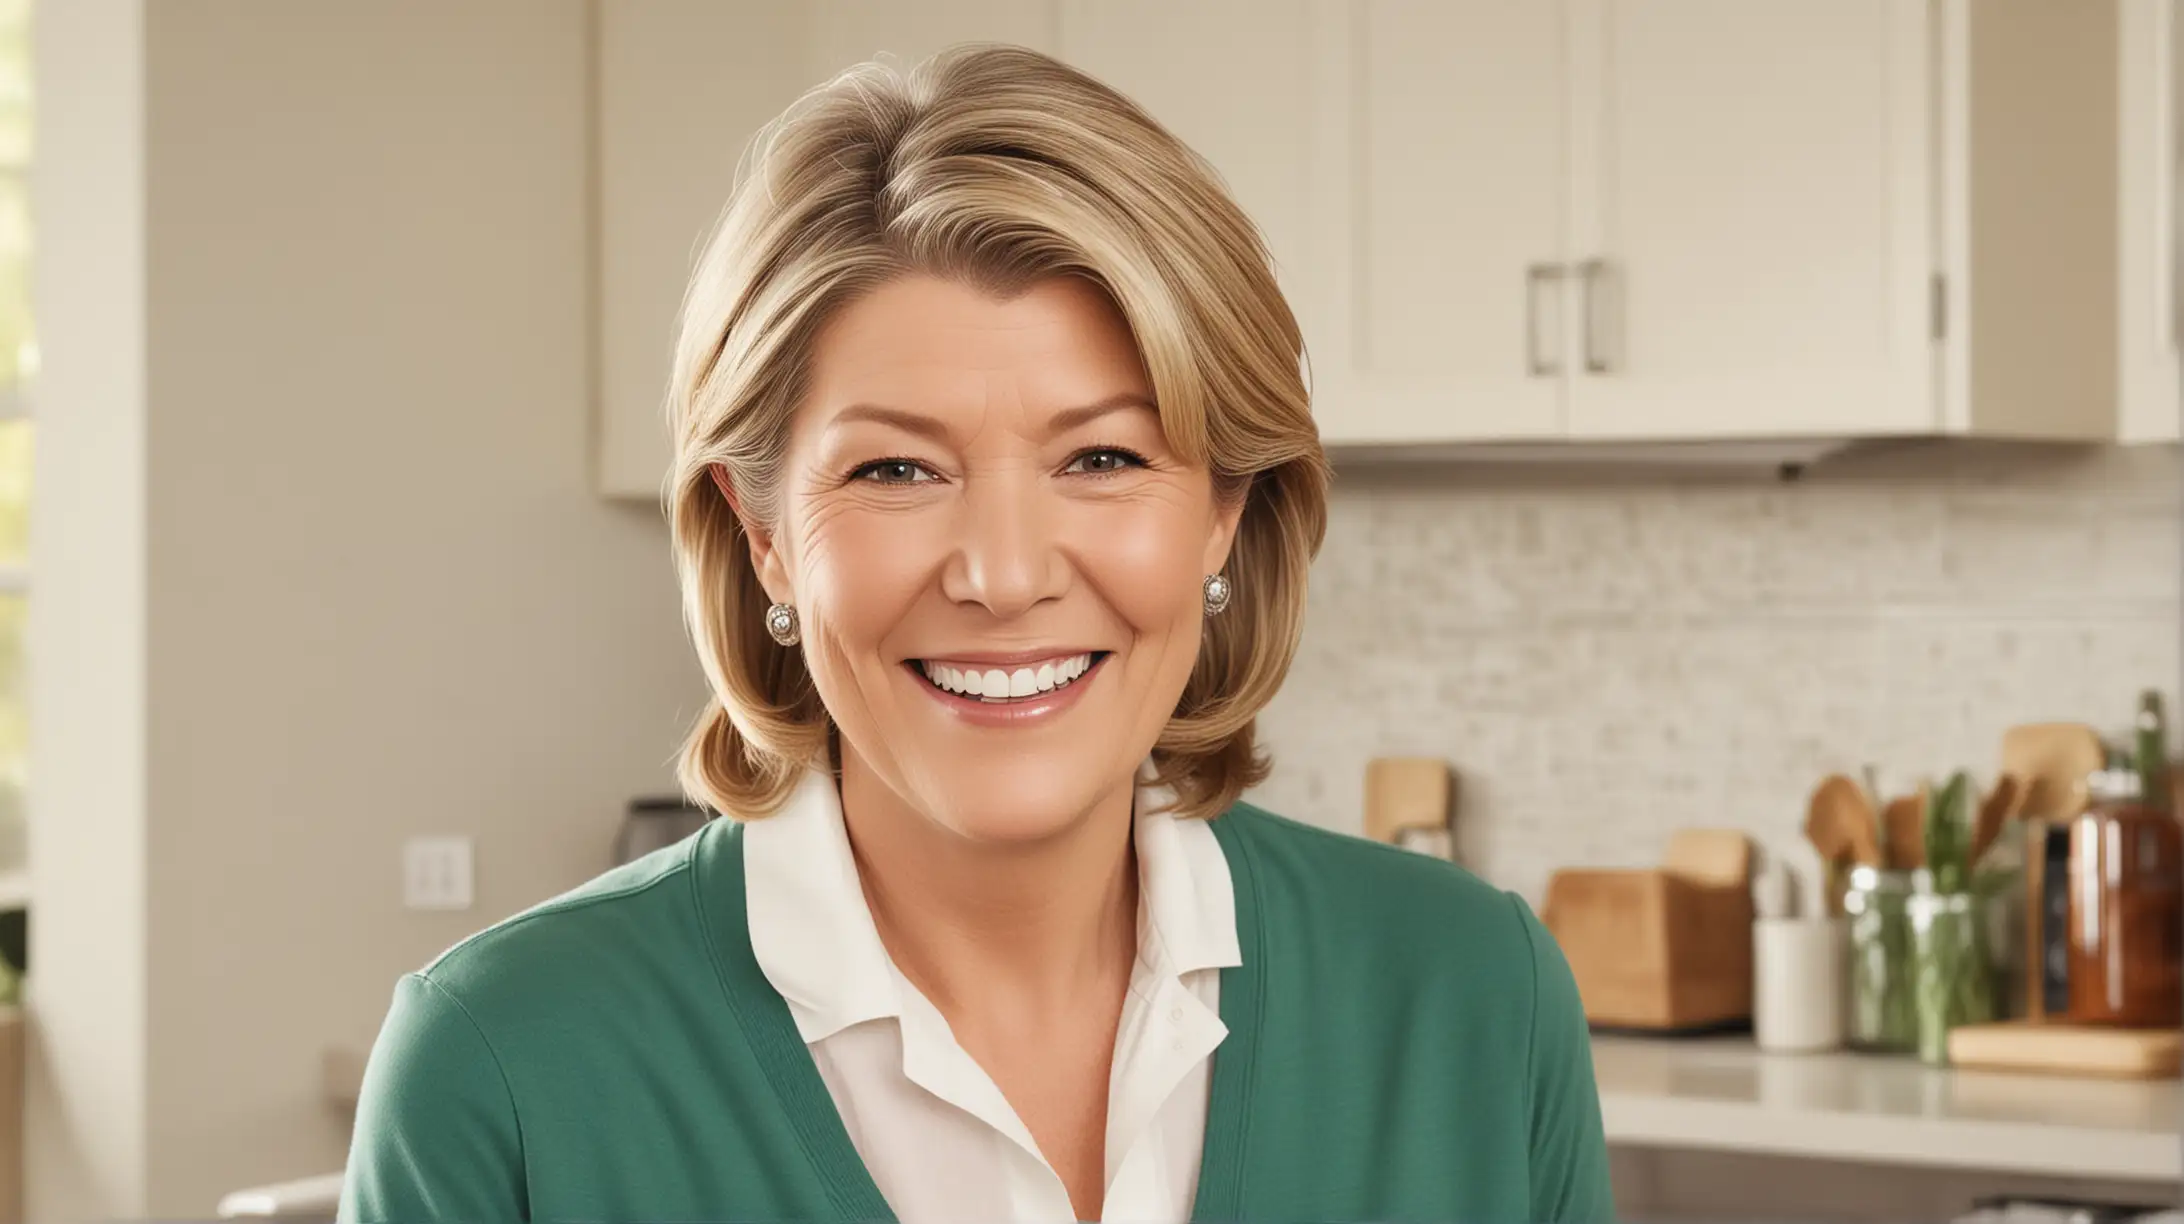 Martha Stewart look alike smiling in the kitchen 